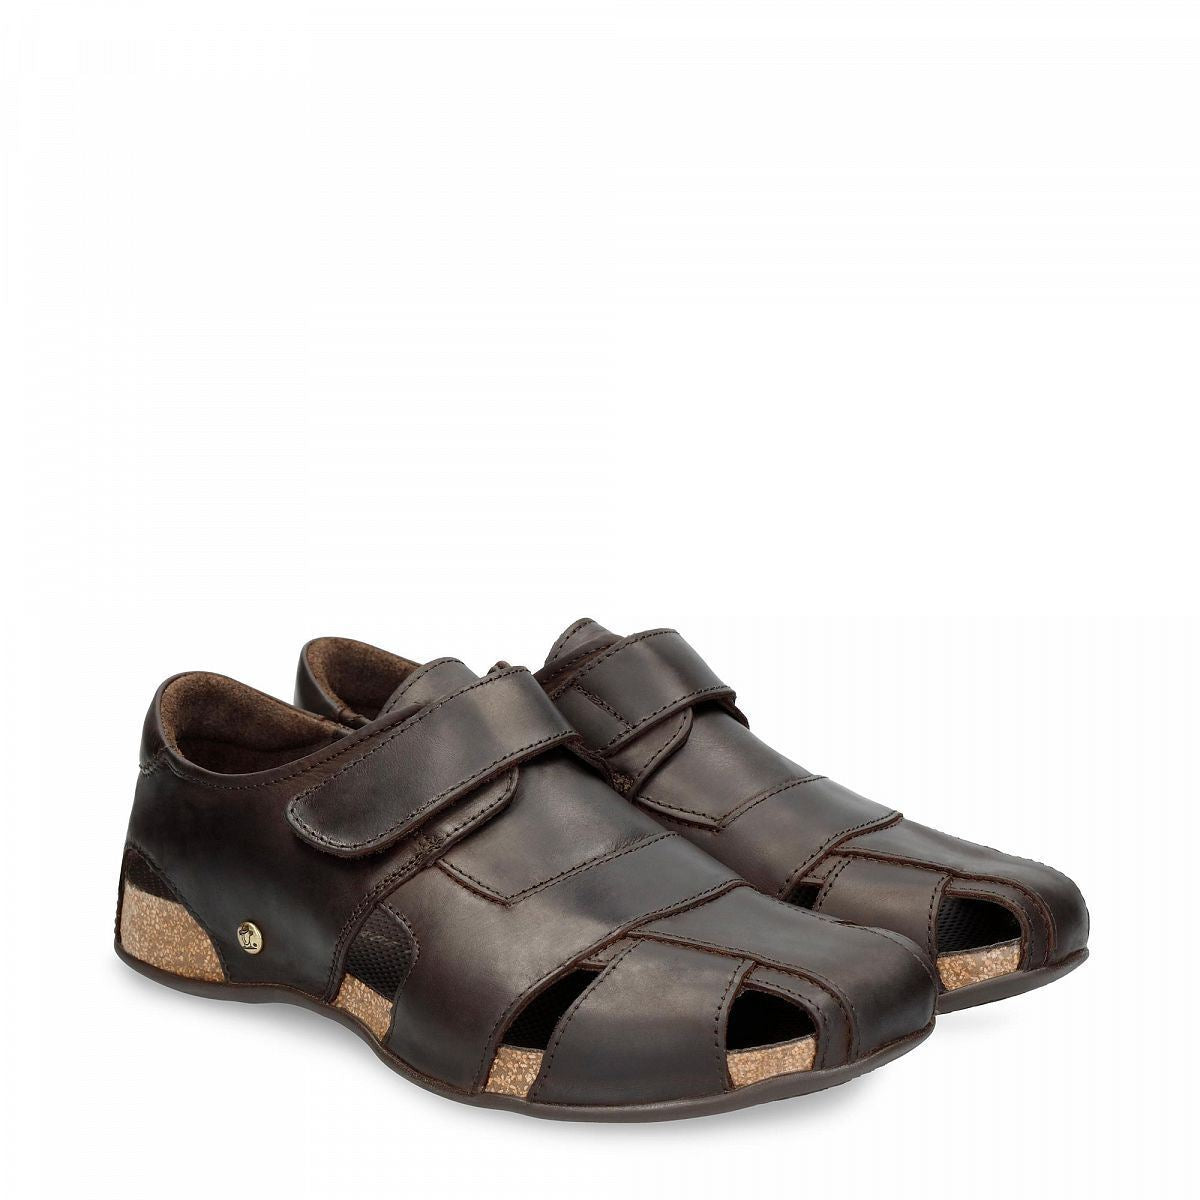 Men's Fletcher Basic C1 Leather Sandals